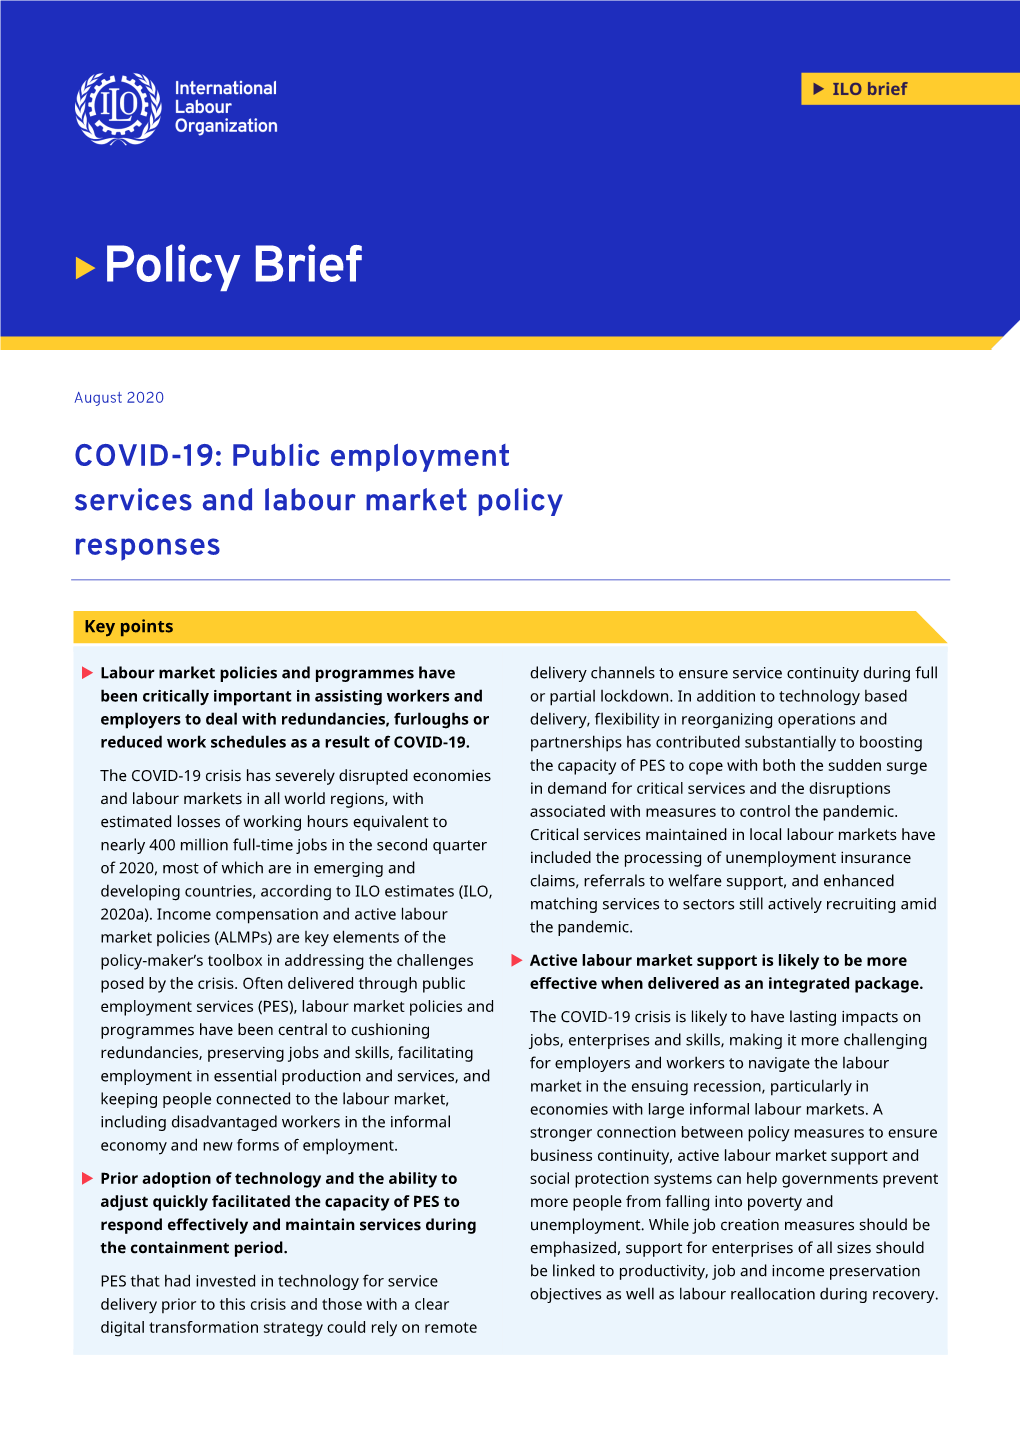 Policy Brief: COVID-19: Public Employment